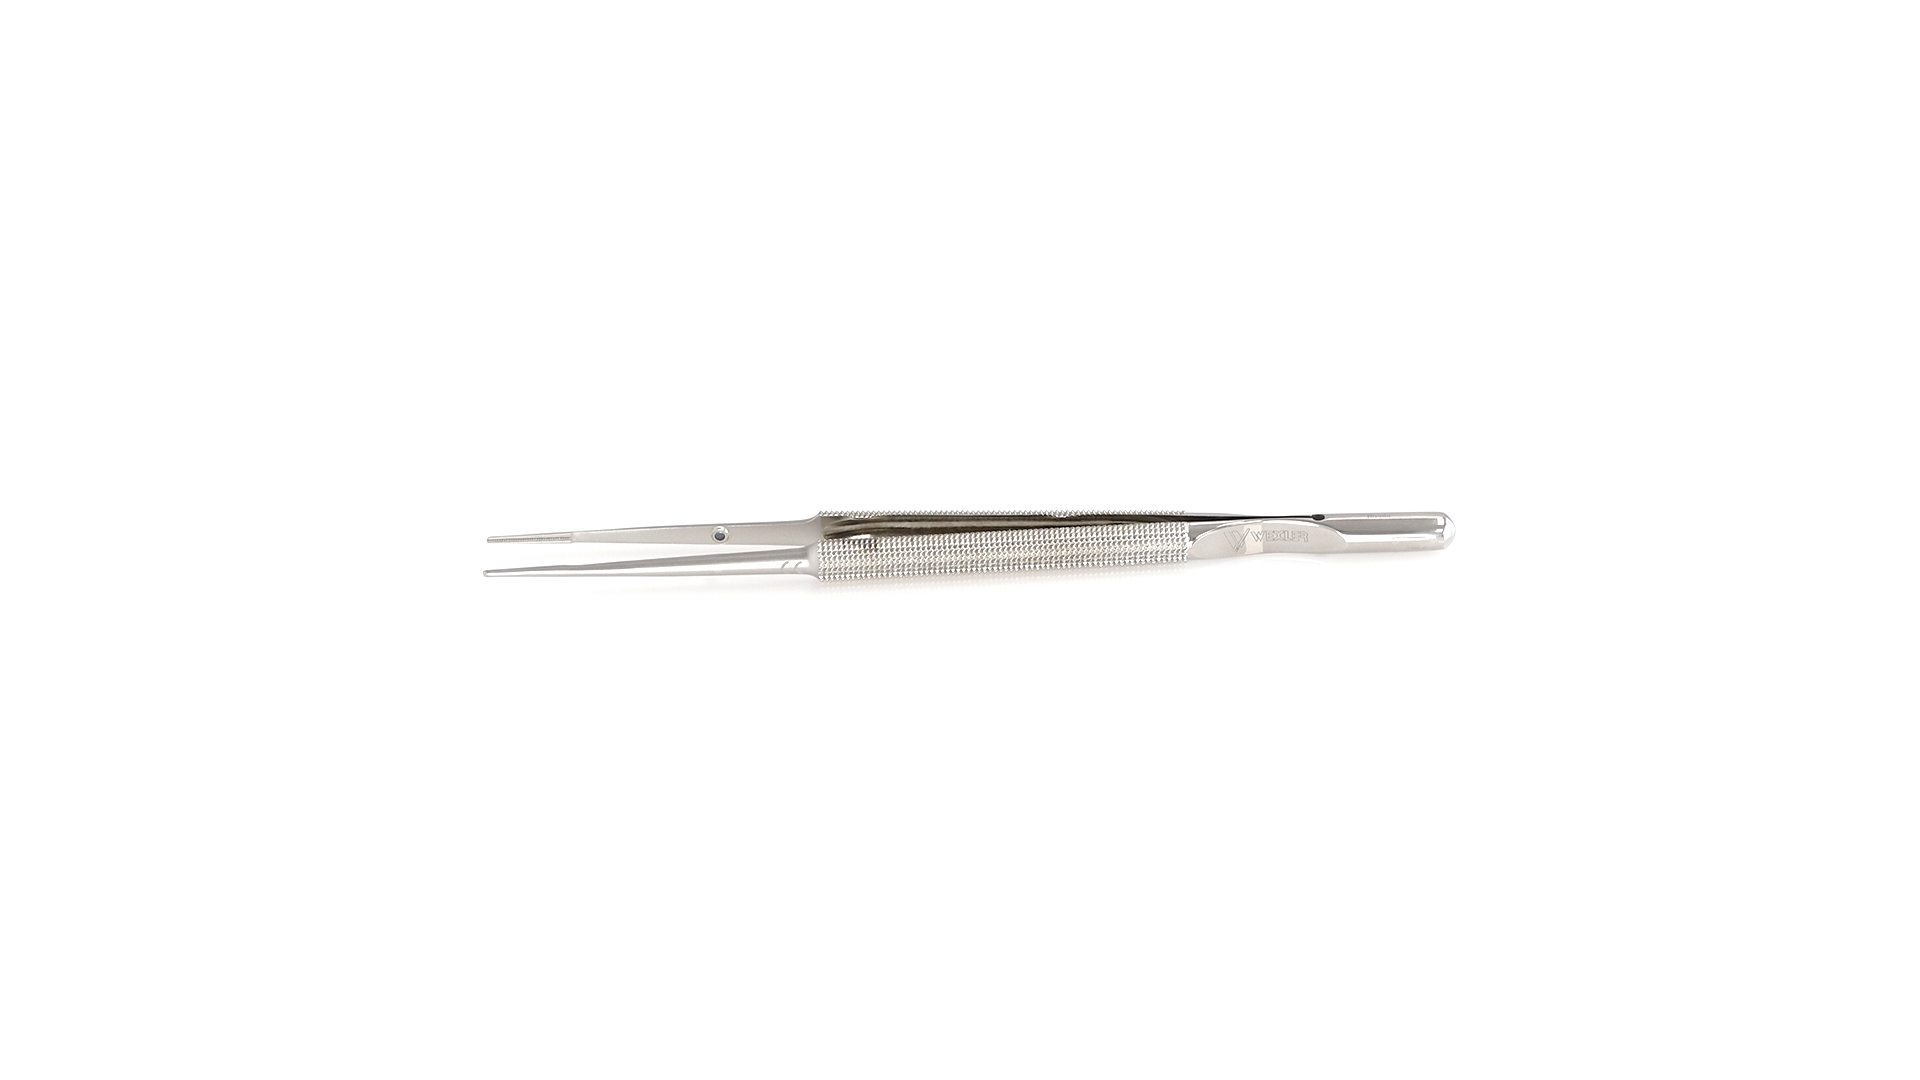 DeBakey Forceps - Straight 1.5mm tips